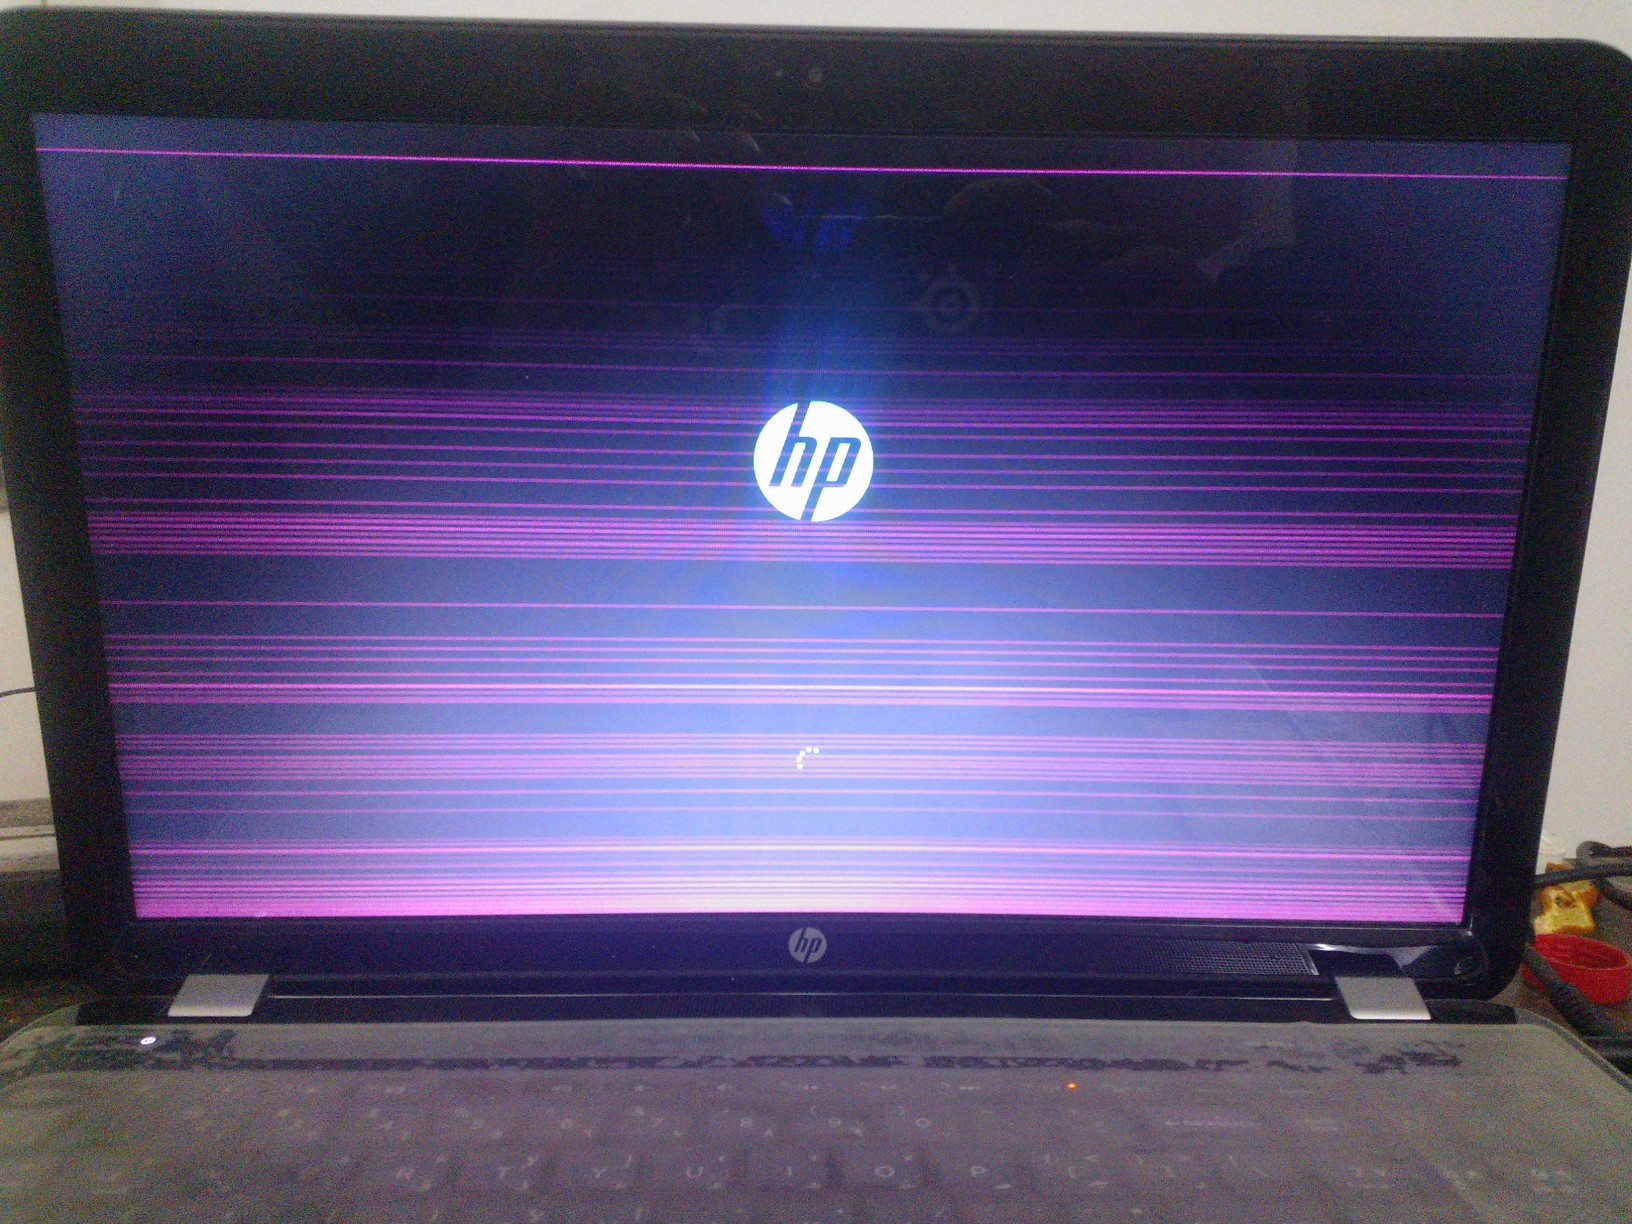 hp laptop display flickering